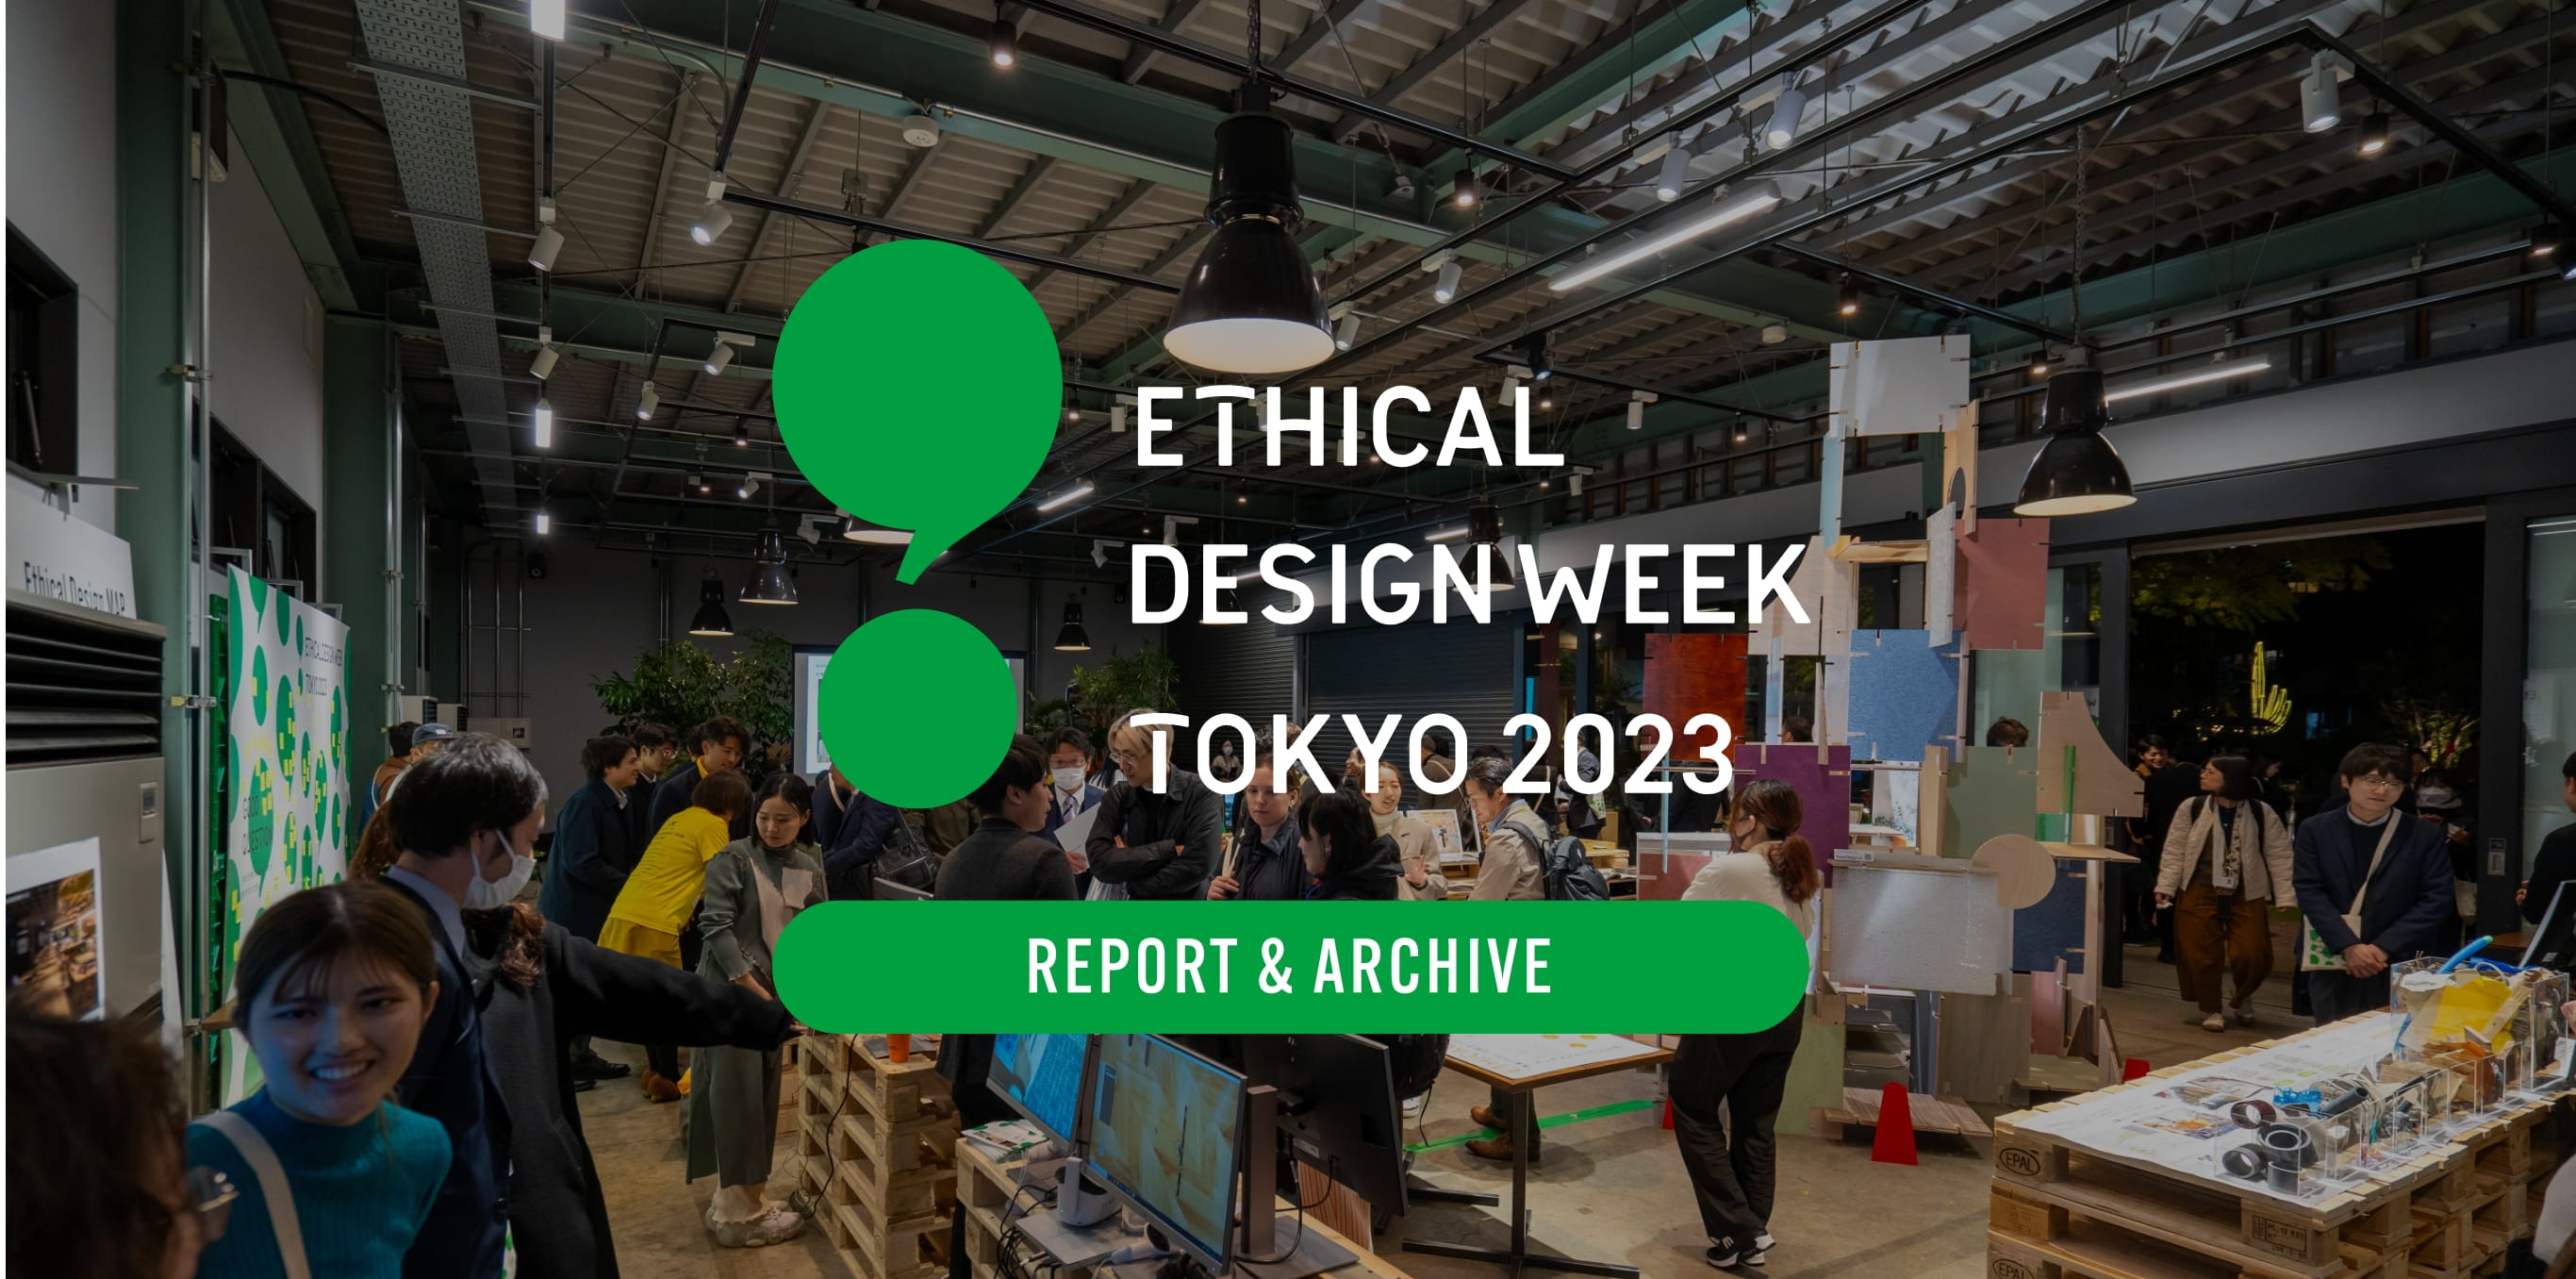 ETHICAL DESIGN WEEK TOKYO